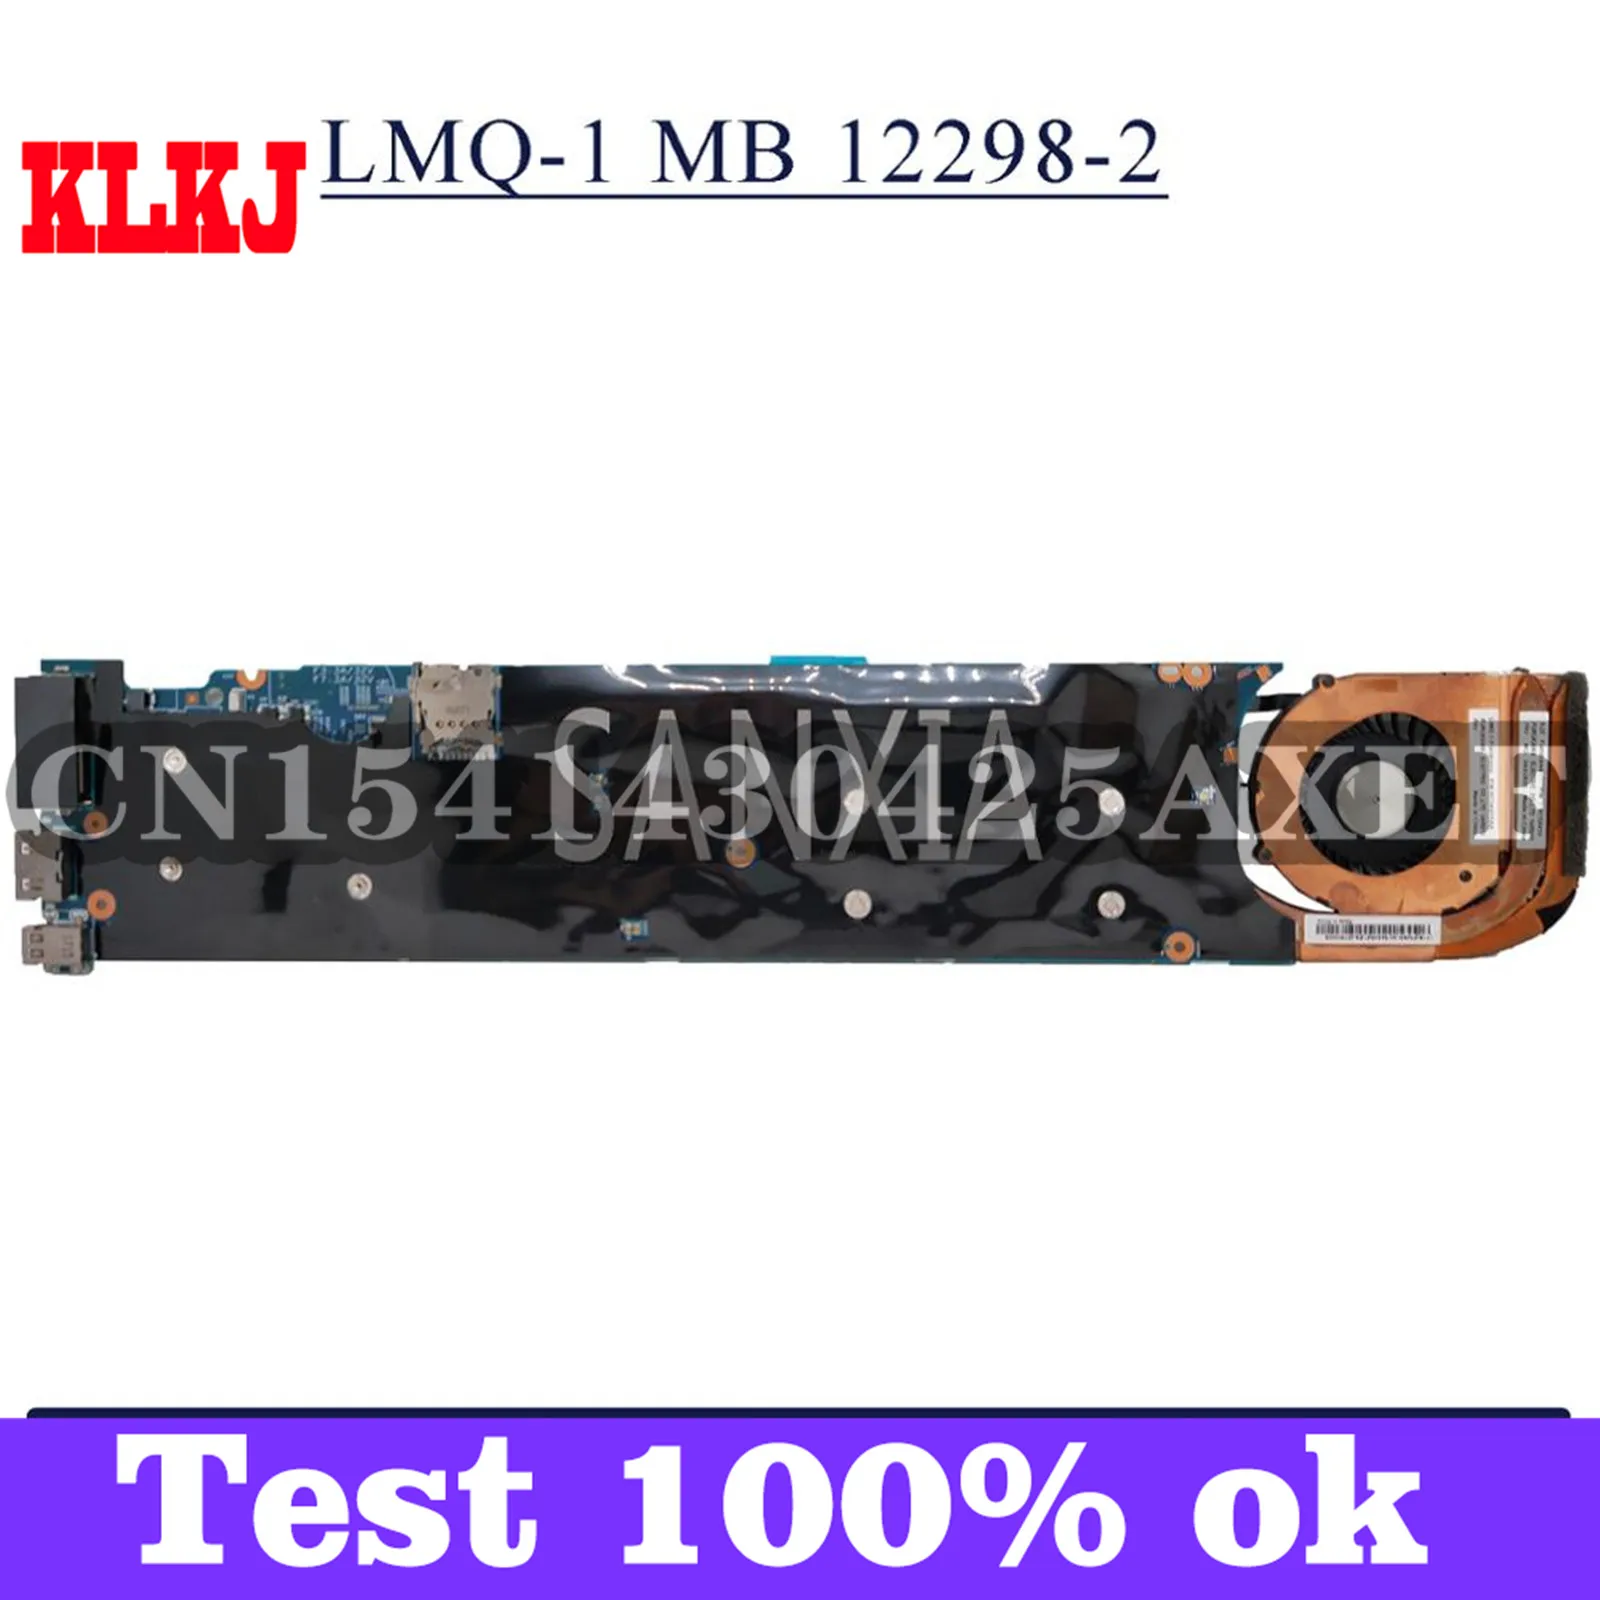 klkj lmq 1 12298 2 laptop motherboard for lenovo thinkpad x1 carbon 2014 original mainboard 8gb ram i7 4600u free global shipping